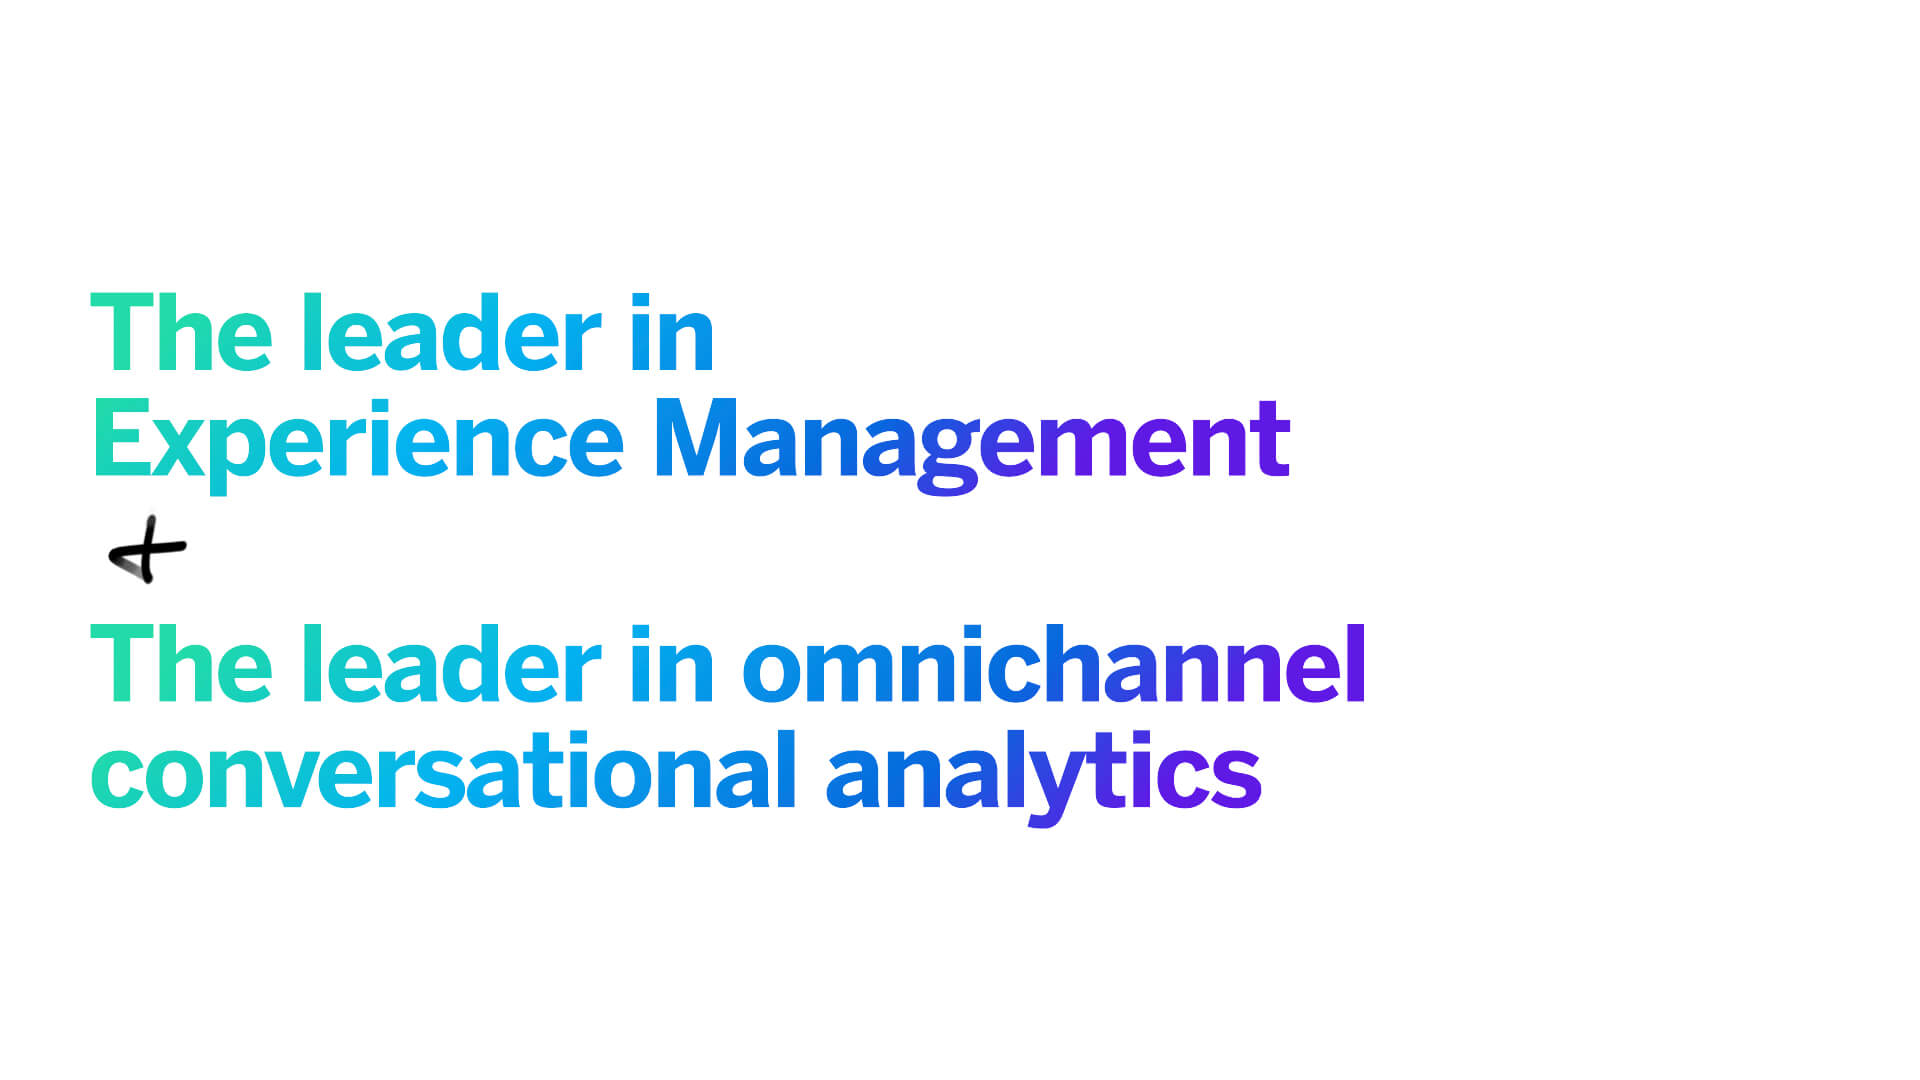 Qualtrics & Clarabridge - The leader in XM and omnichannel conversational analytics